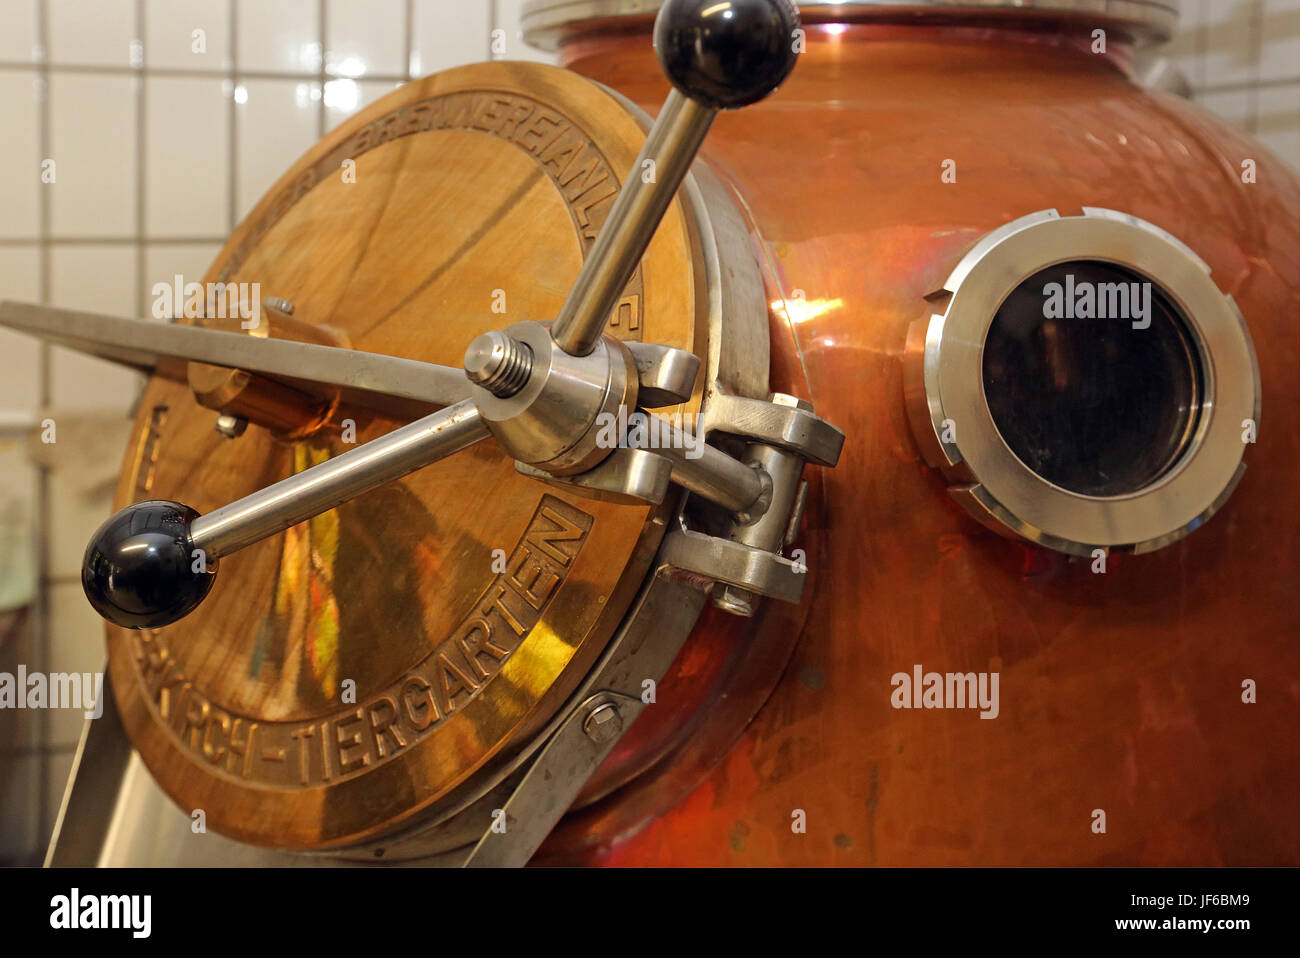 distillery Stock Photo